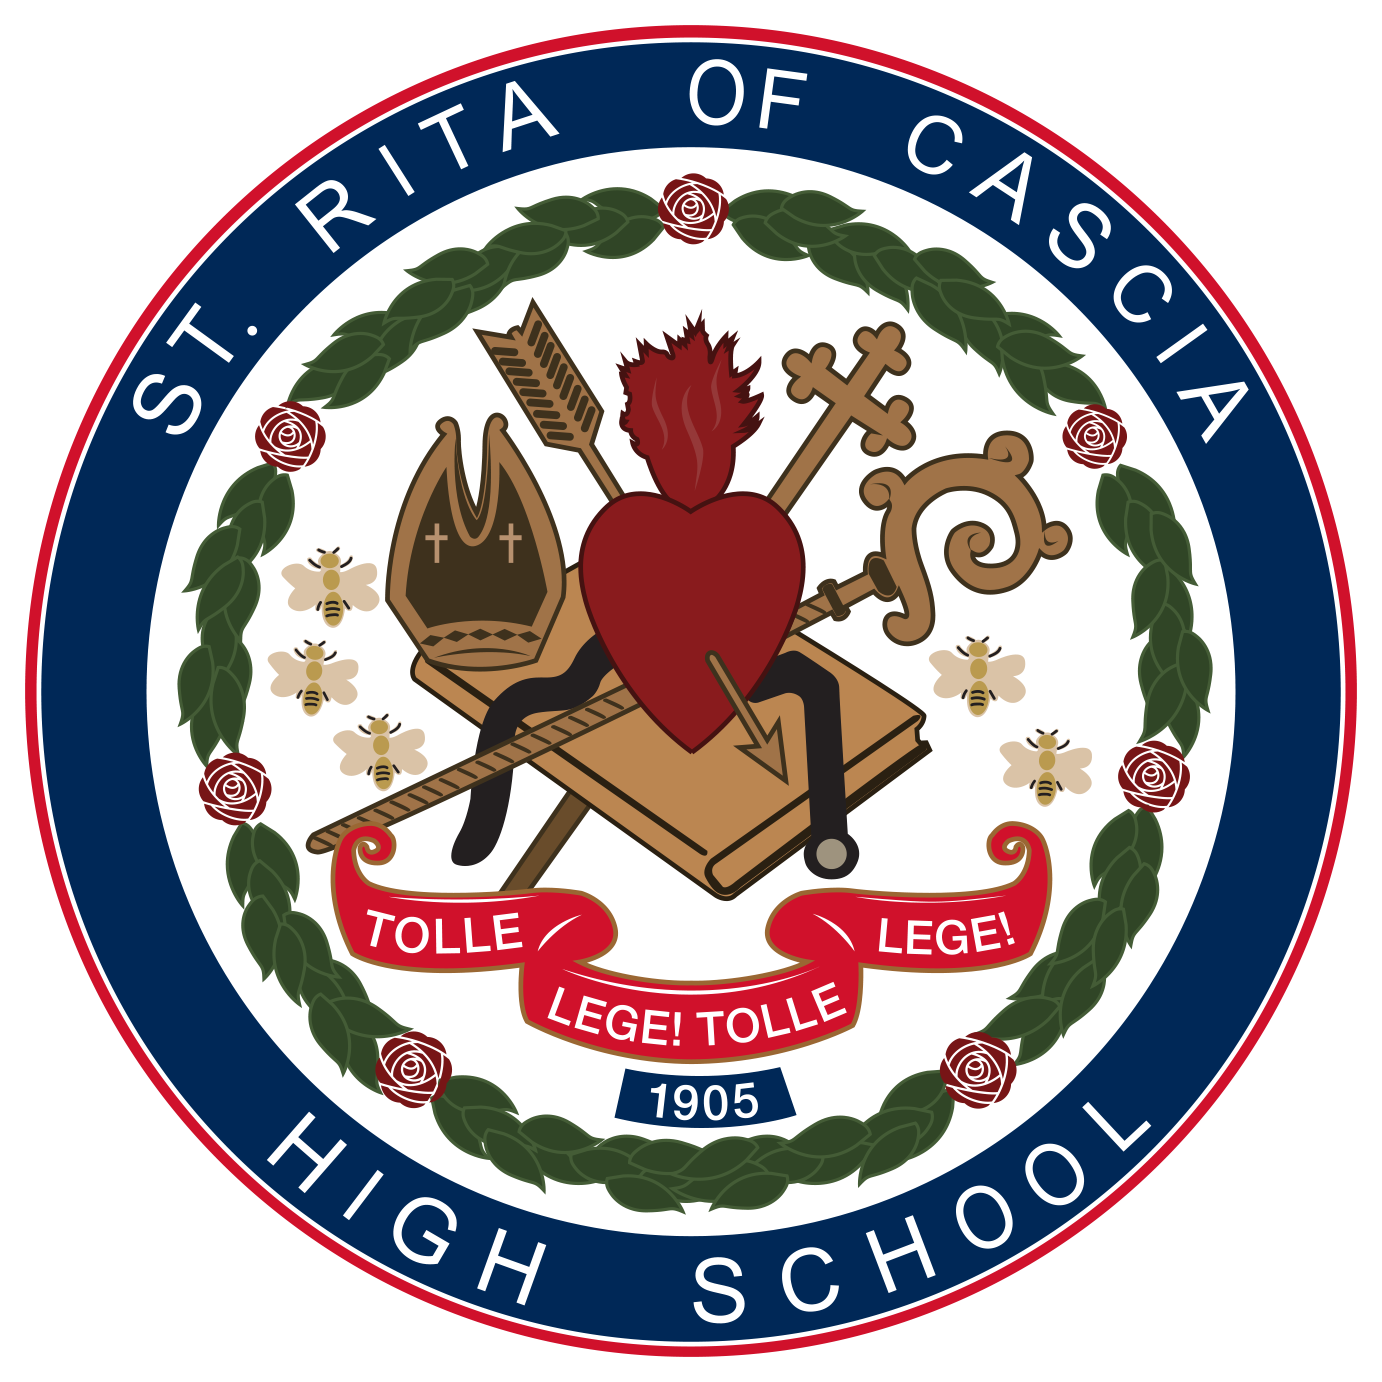 St Rita High School